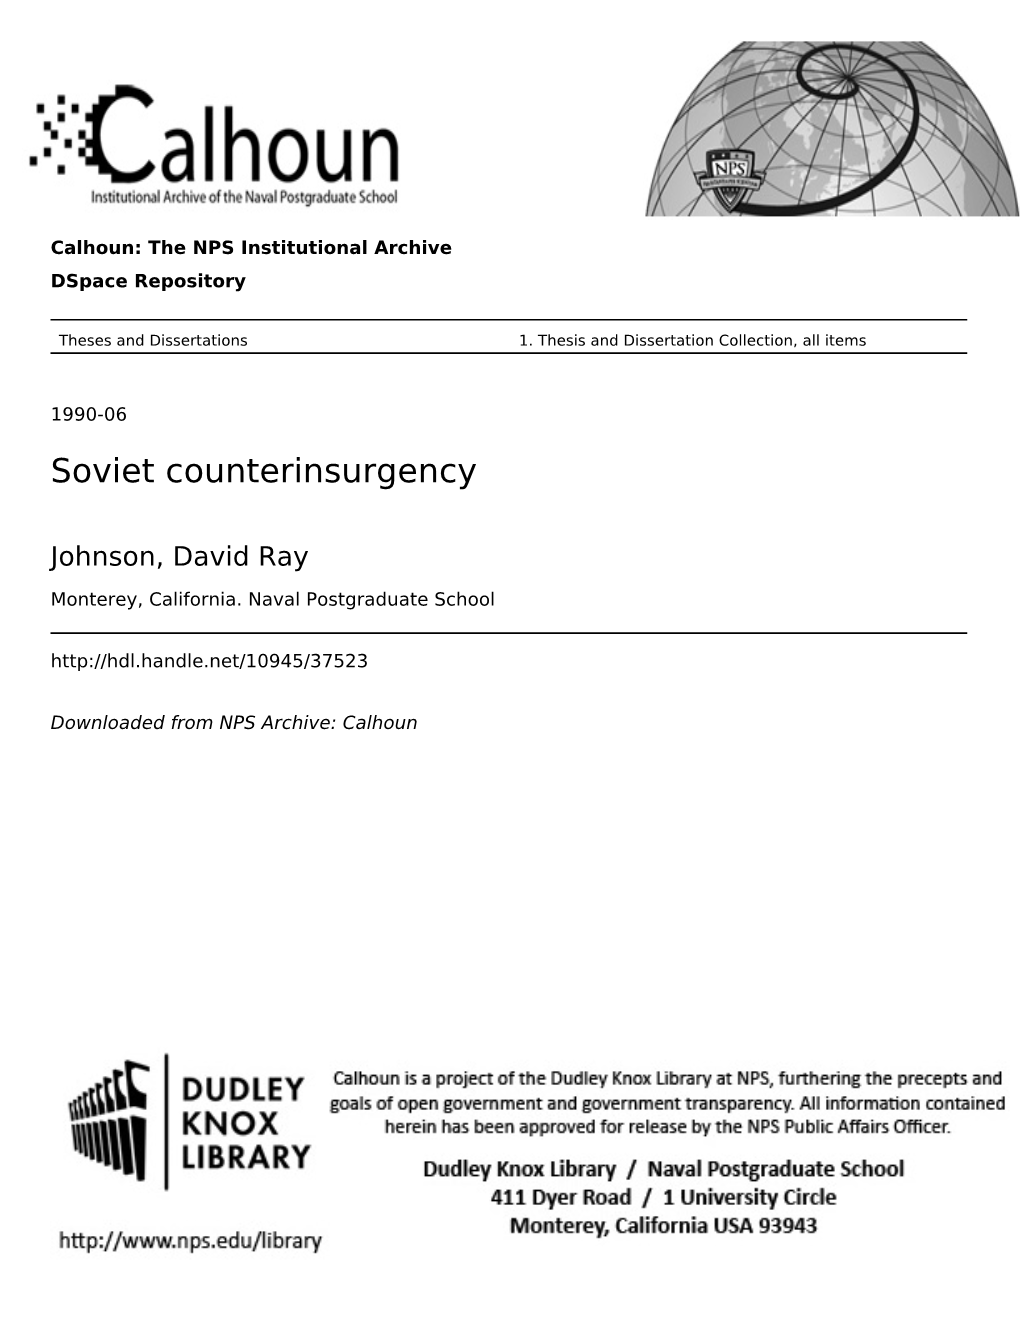 Soviet Counterinsurgency